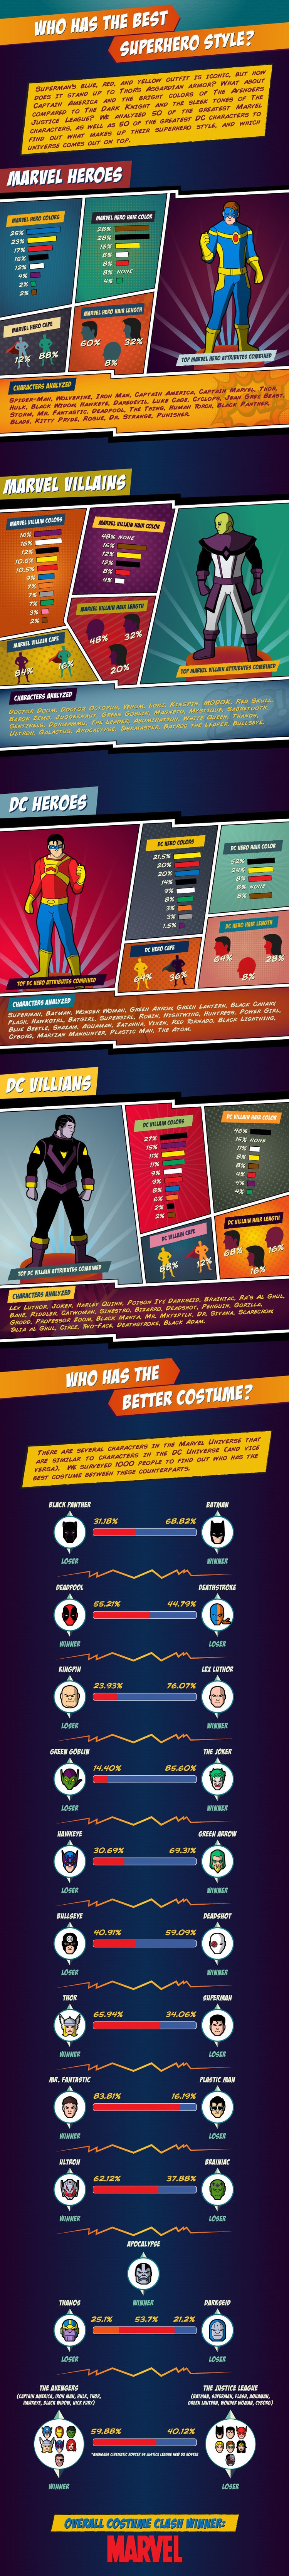 marvel-vs-dc-costume-clash-infographic1